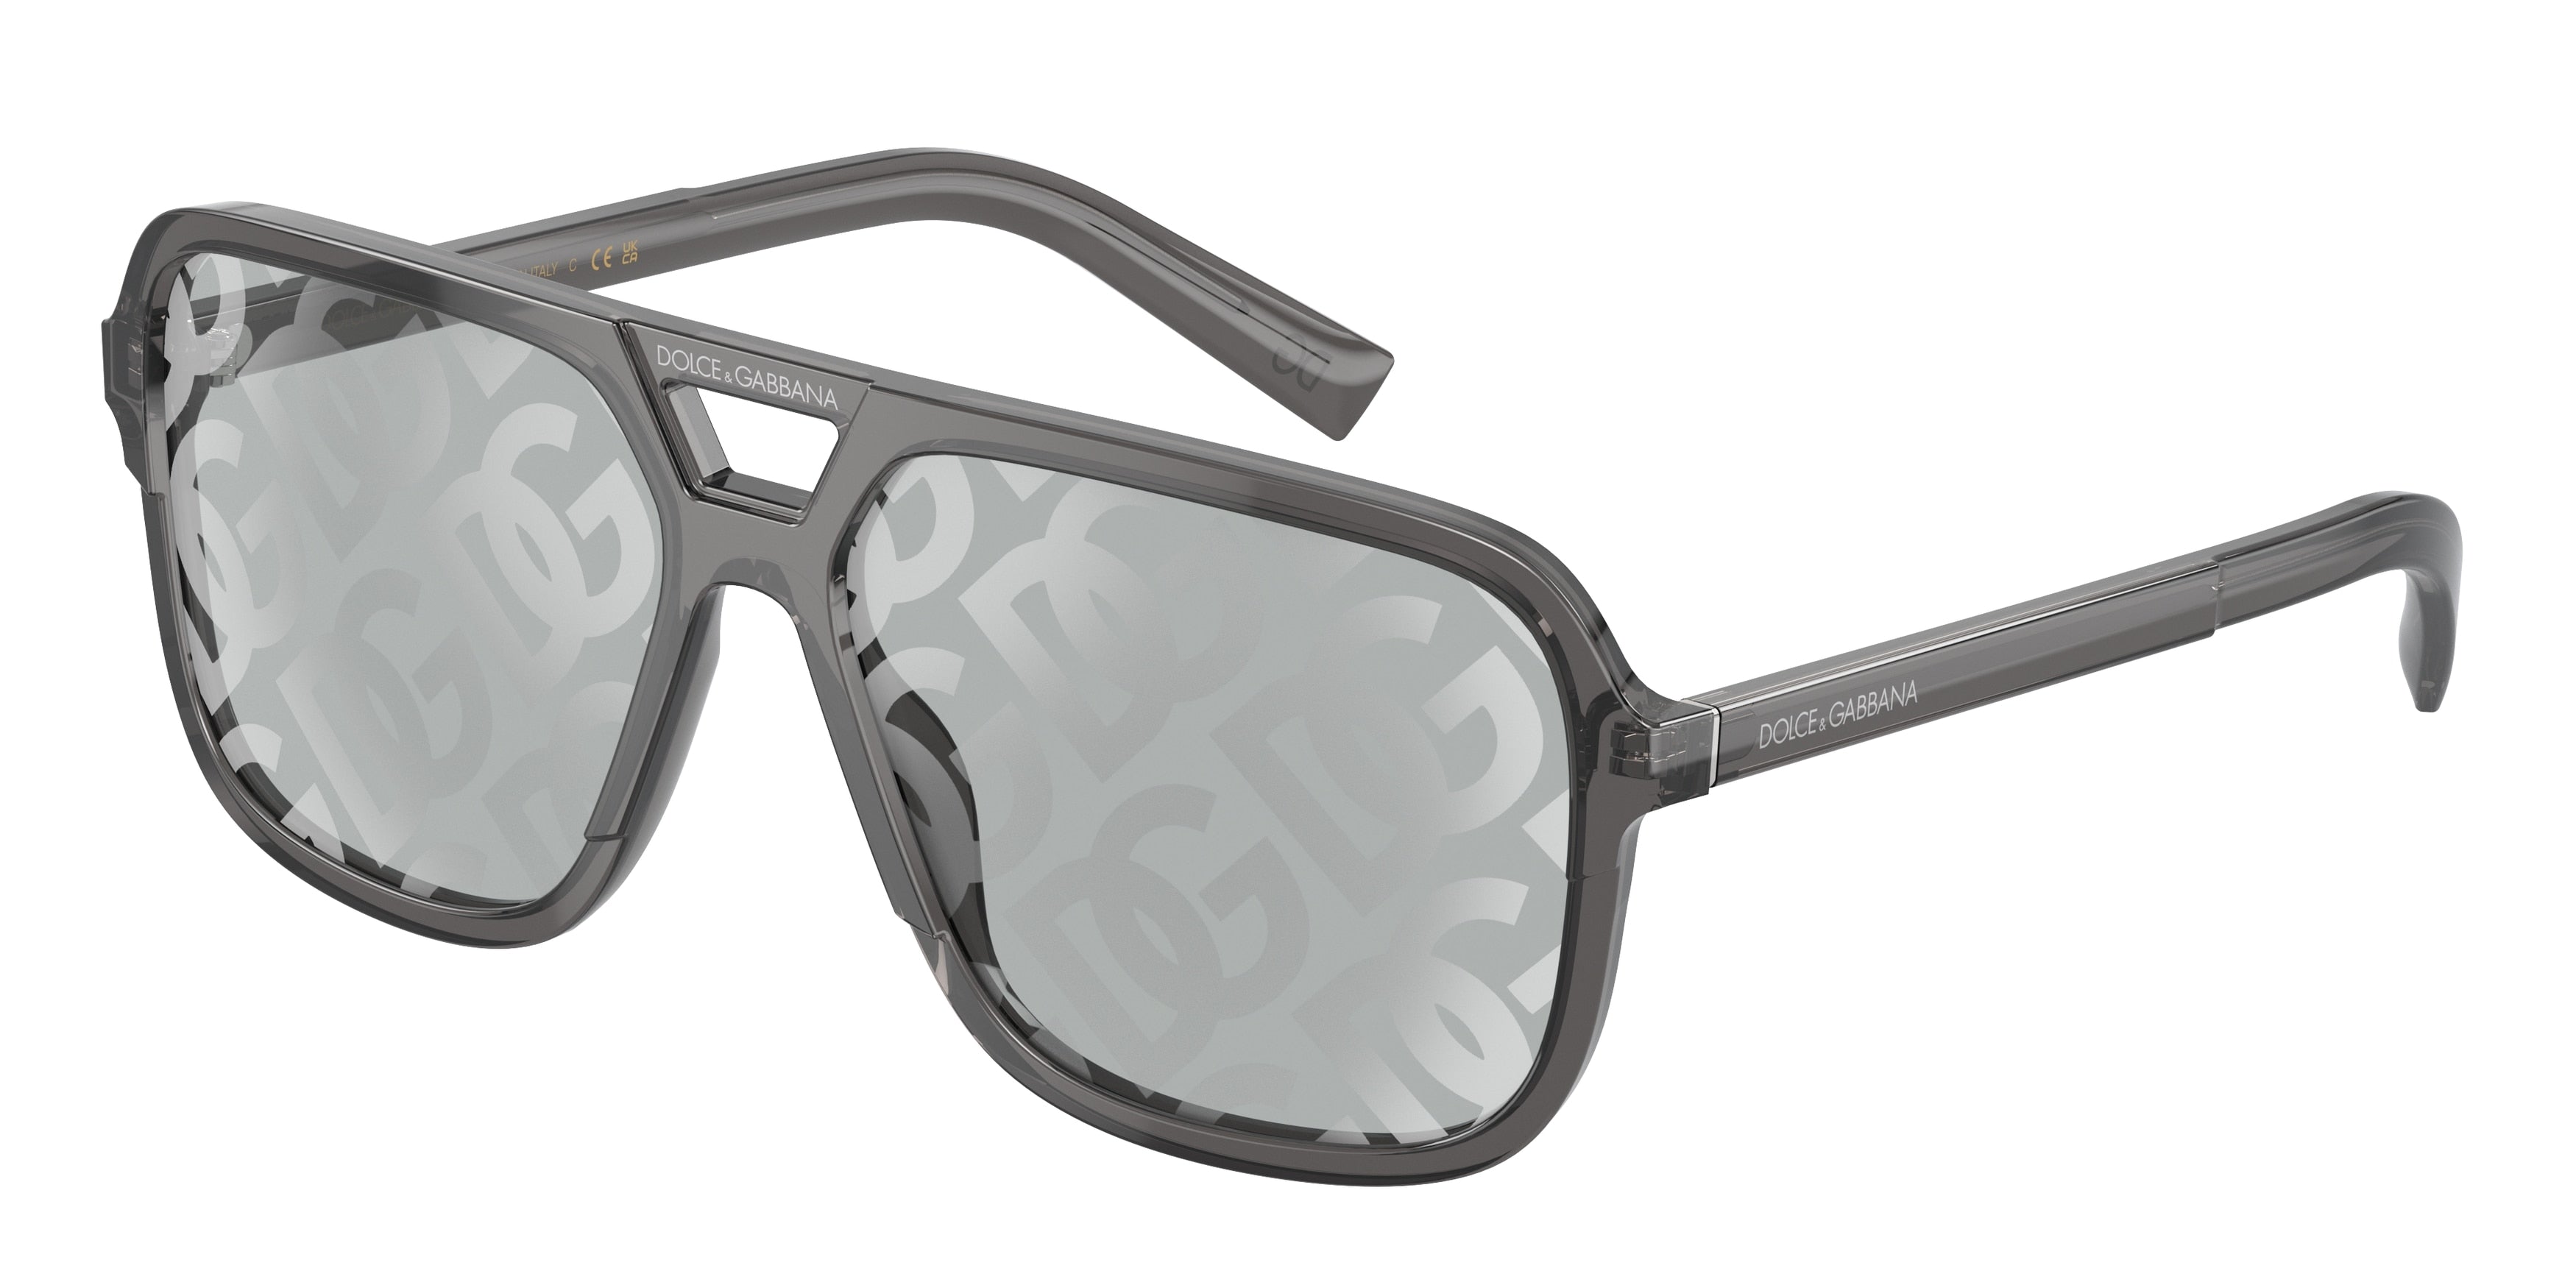 DOLCE & GABBANA DG4354 Square Sunglasses  3160AL-Grey 61-145-15 - Color Map Grey